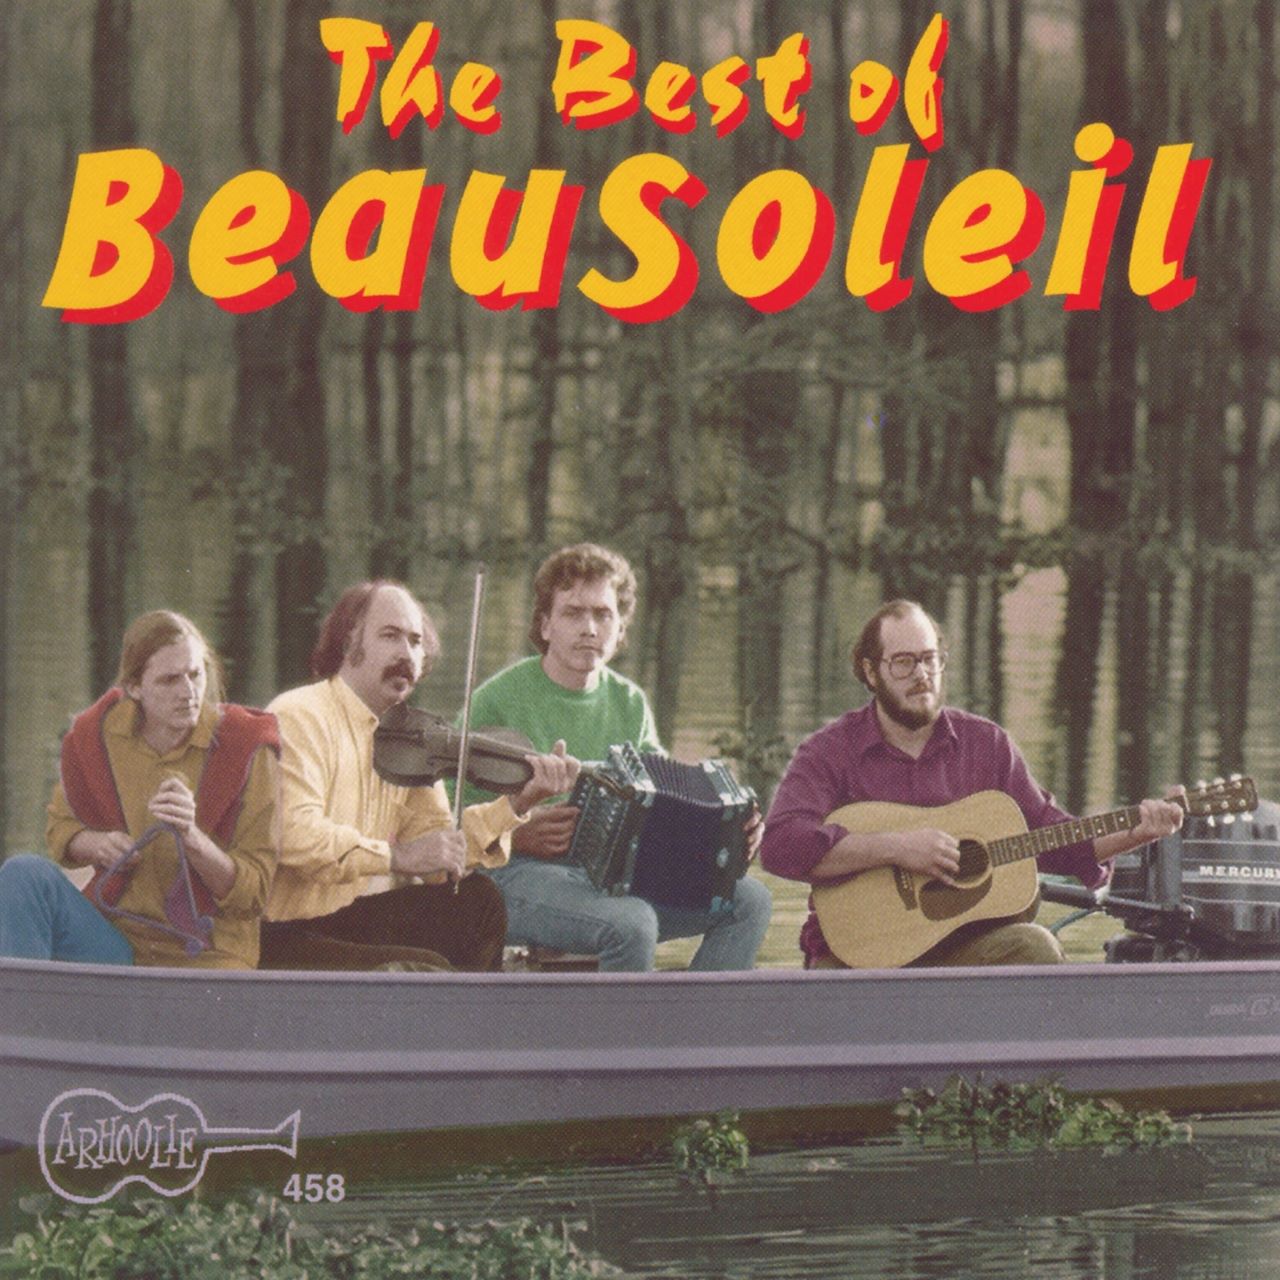 Beausoleil - The Best Of Beausoleil cover album